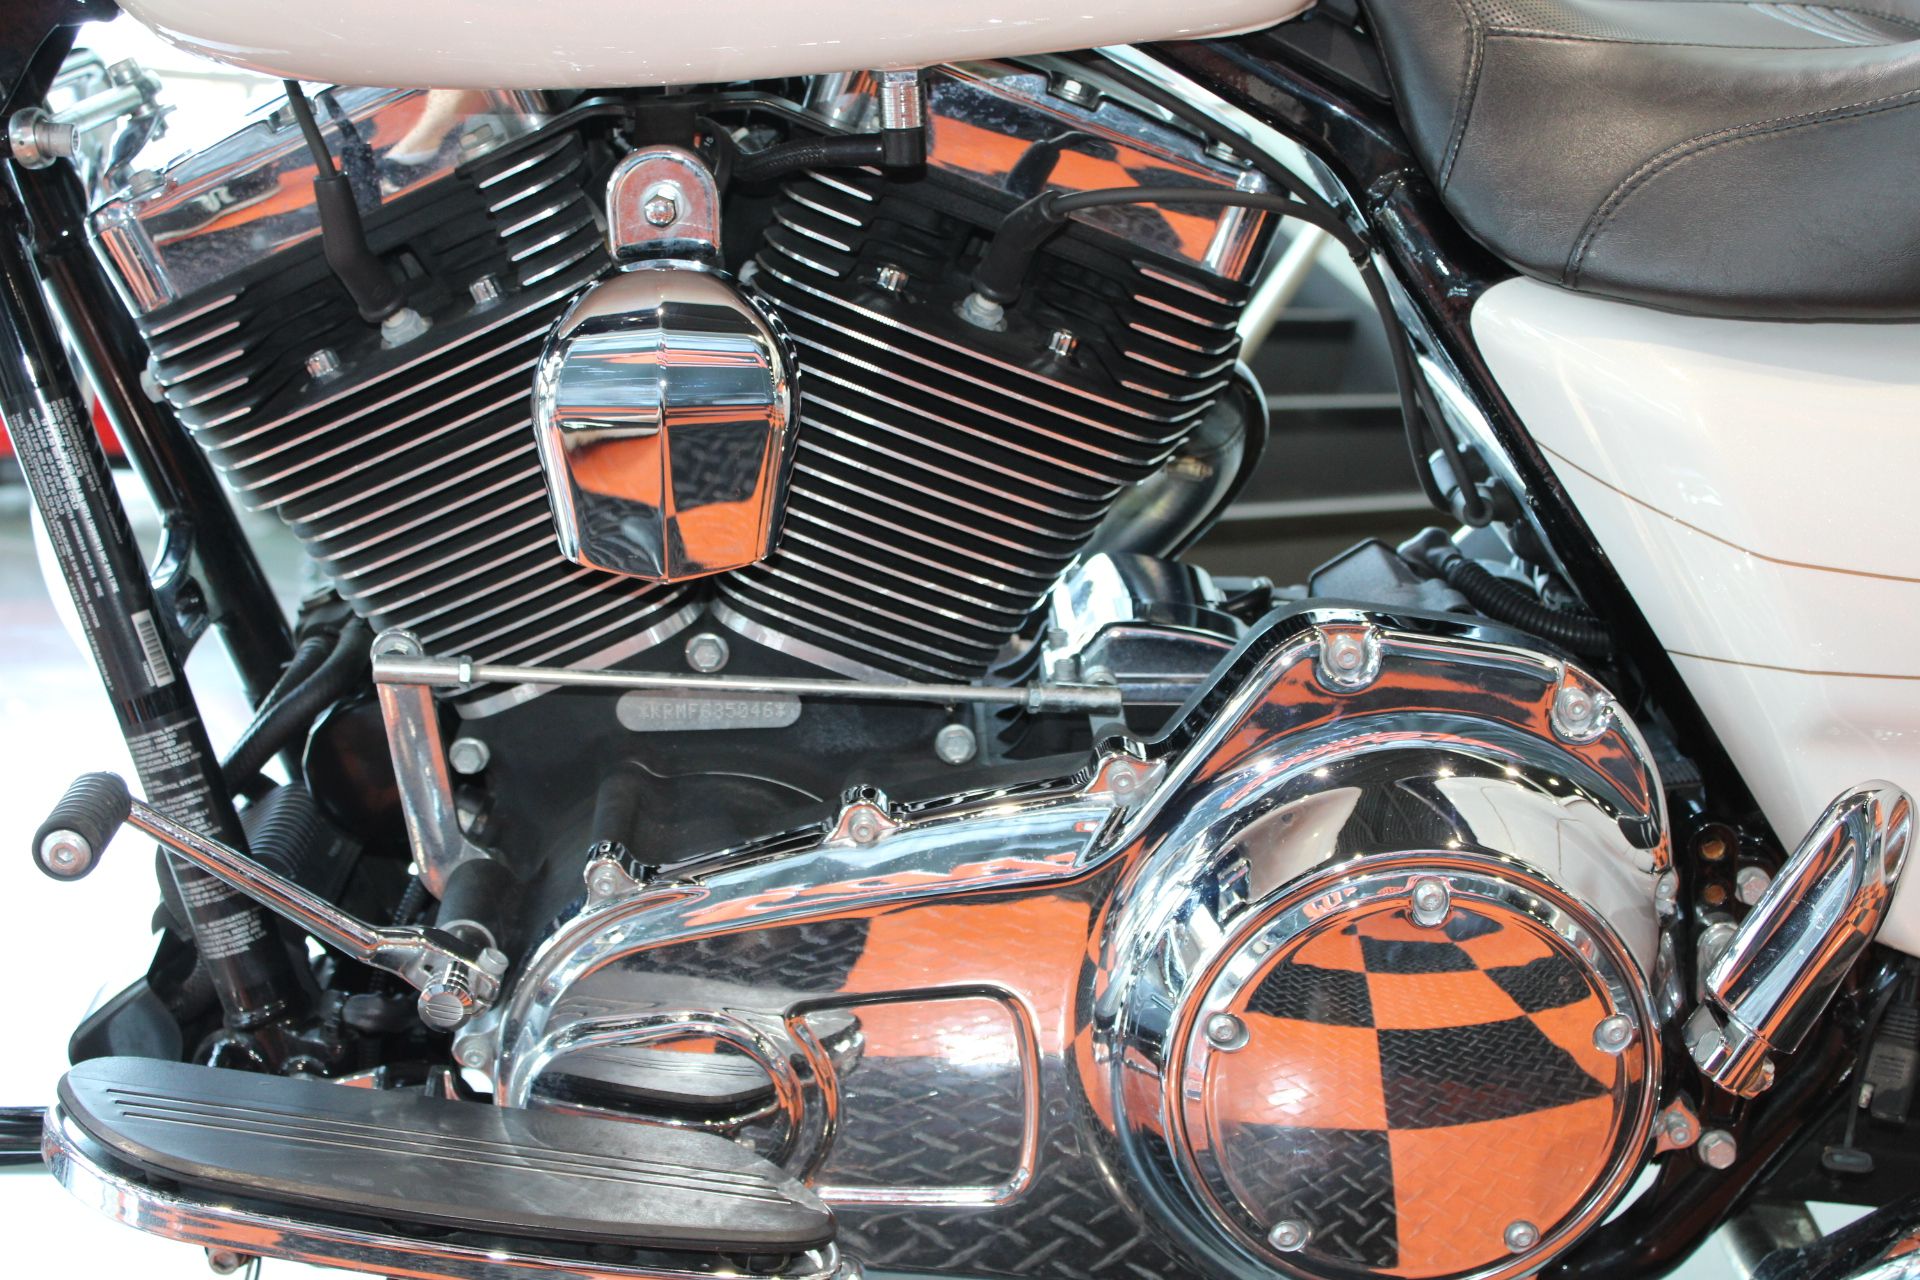 2015 Harley-Davidson Street Glide® Special in Shorewood, Illinois - Photo 17